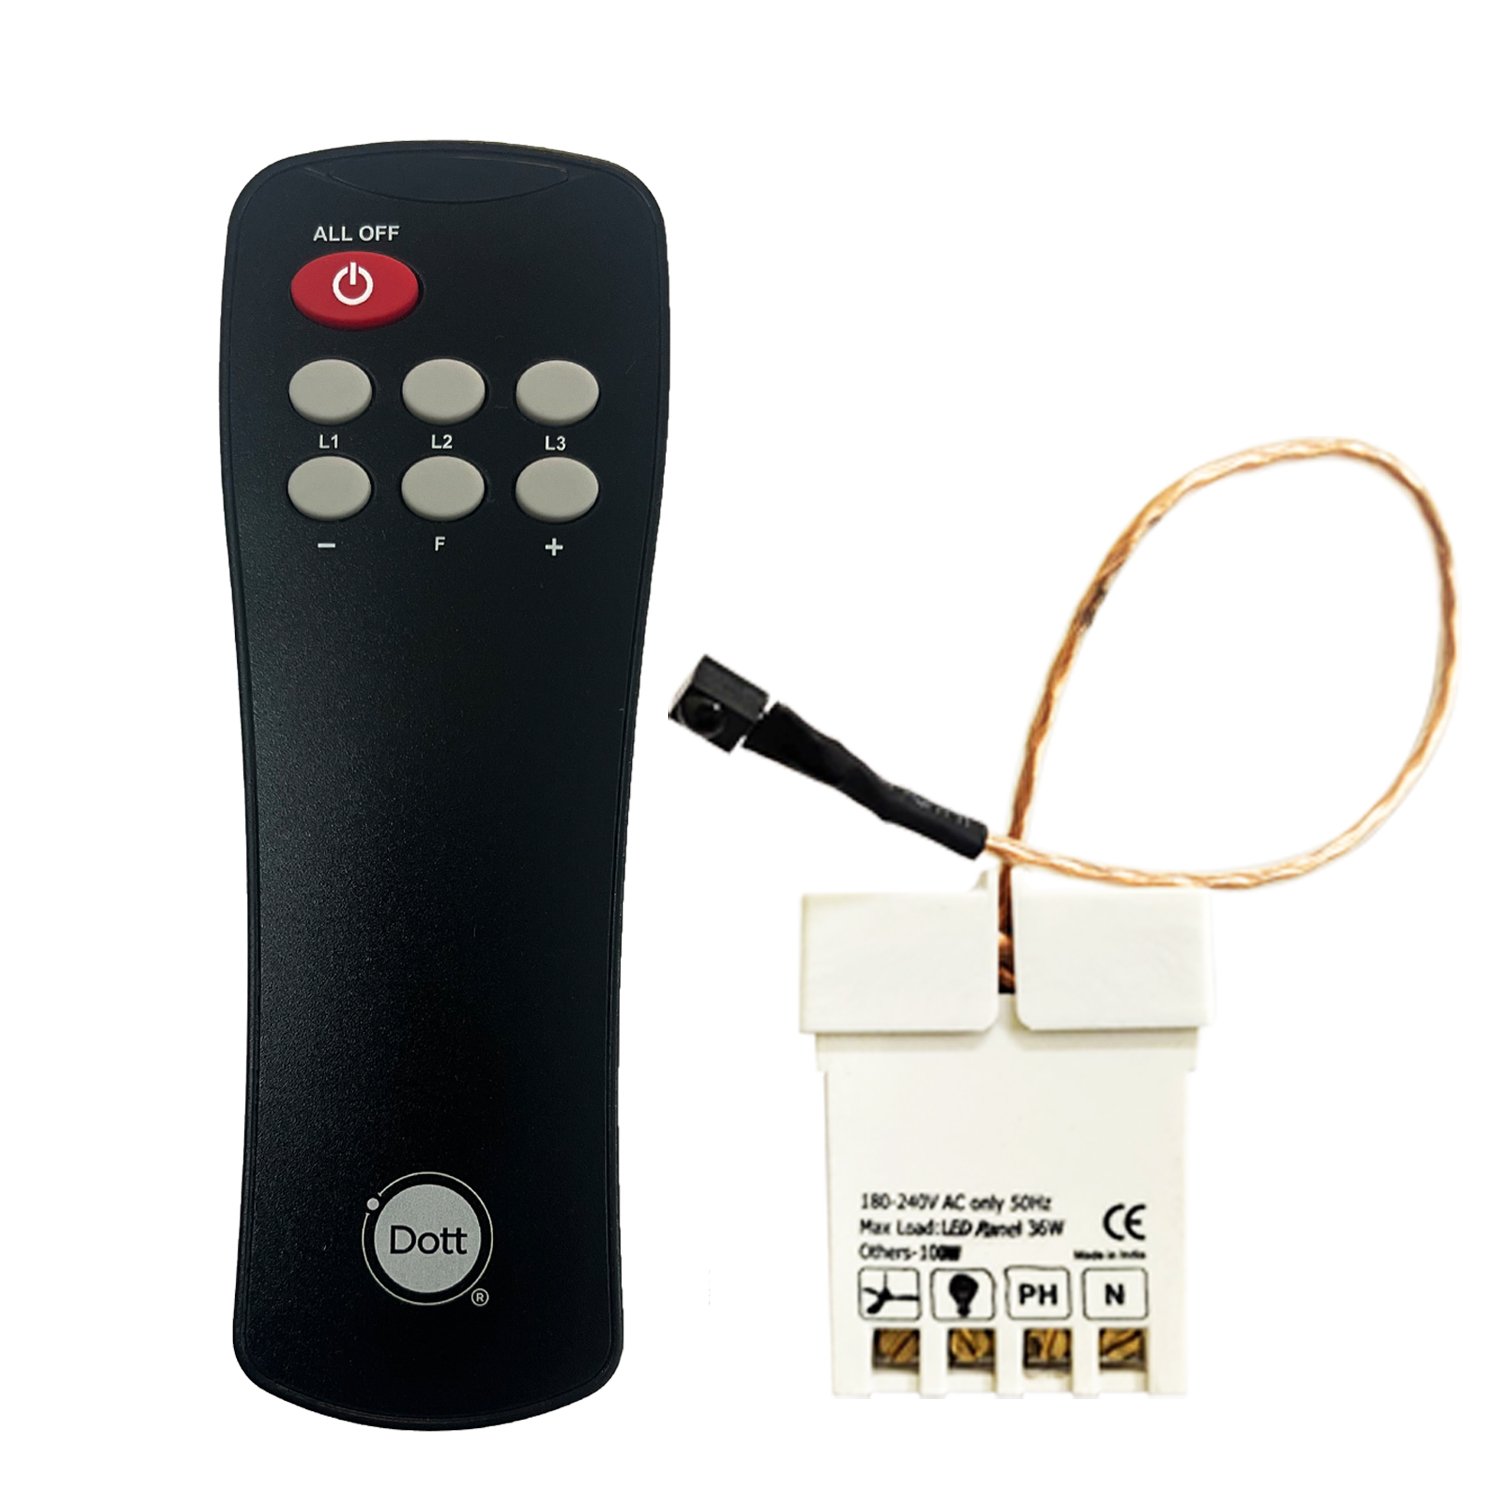 DIAZE LF- Remote Control Device For 1 Light & 1 Fan